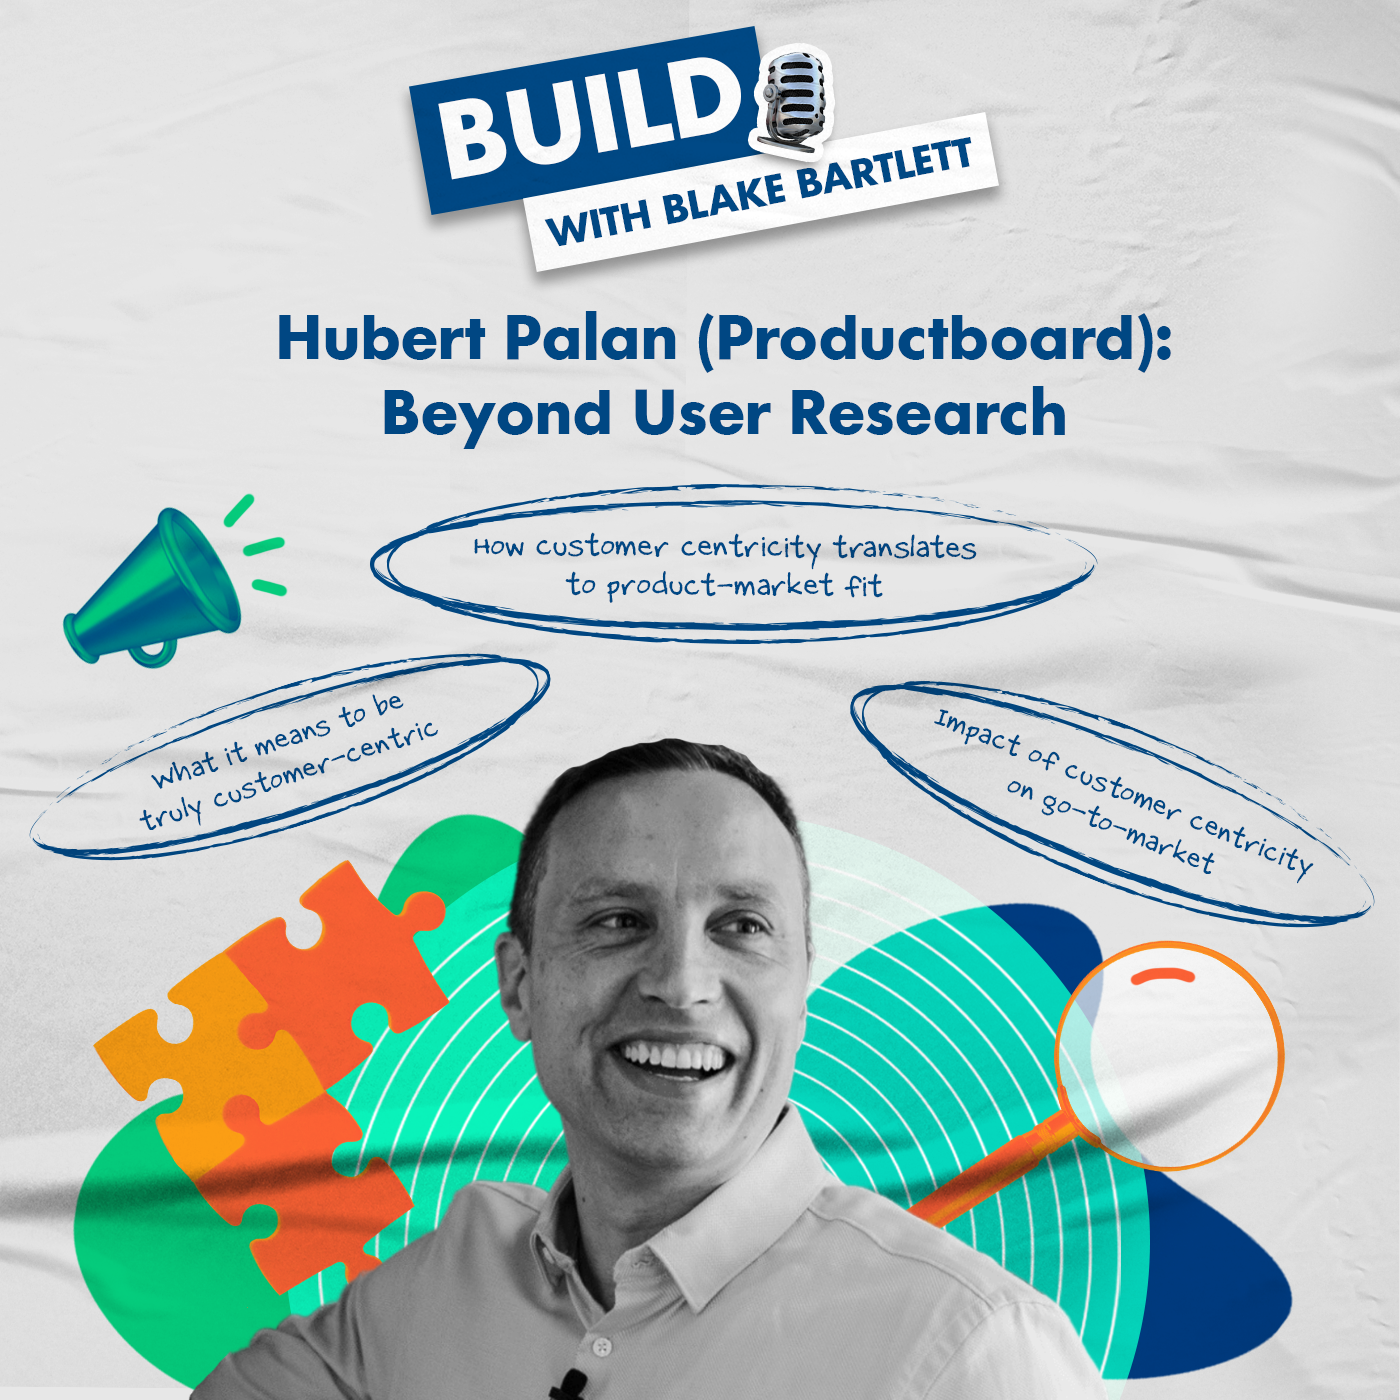 Hubert Palan (Productboard): Going Beyond User Research